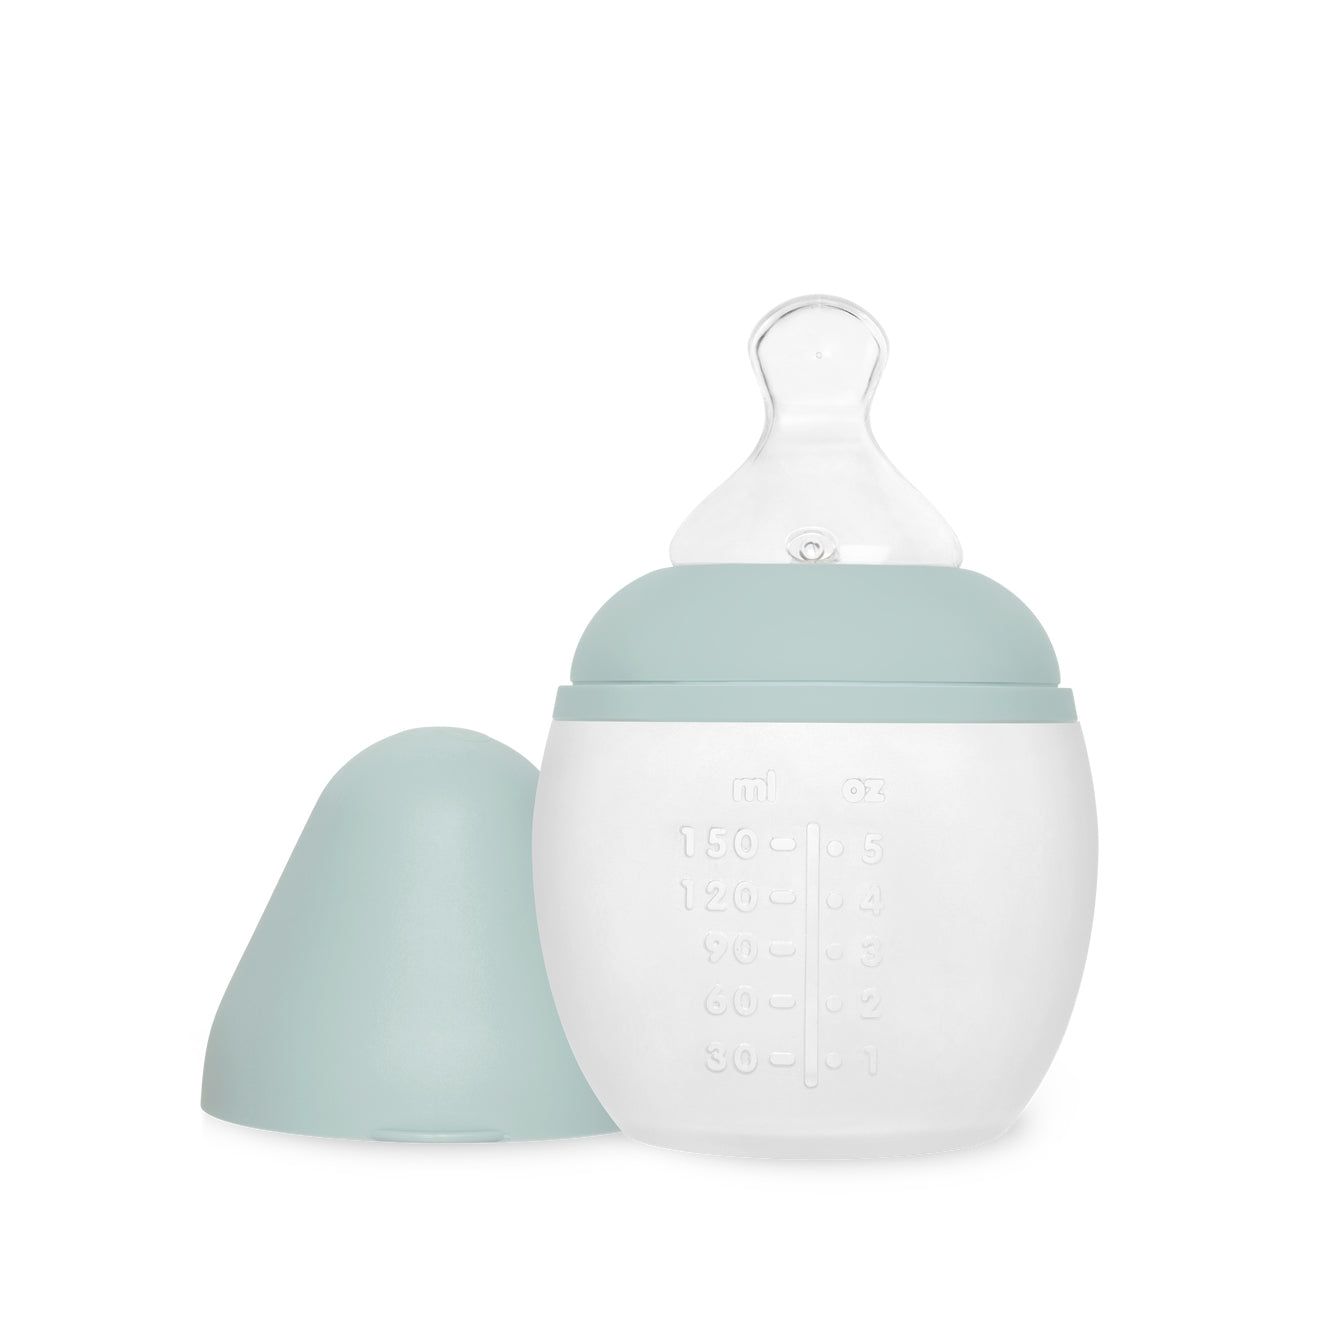 Baby bottle 150ml - 05 Oz